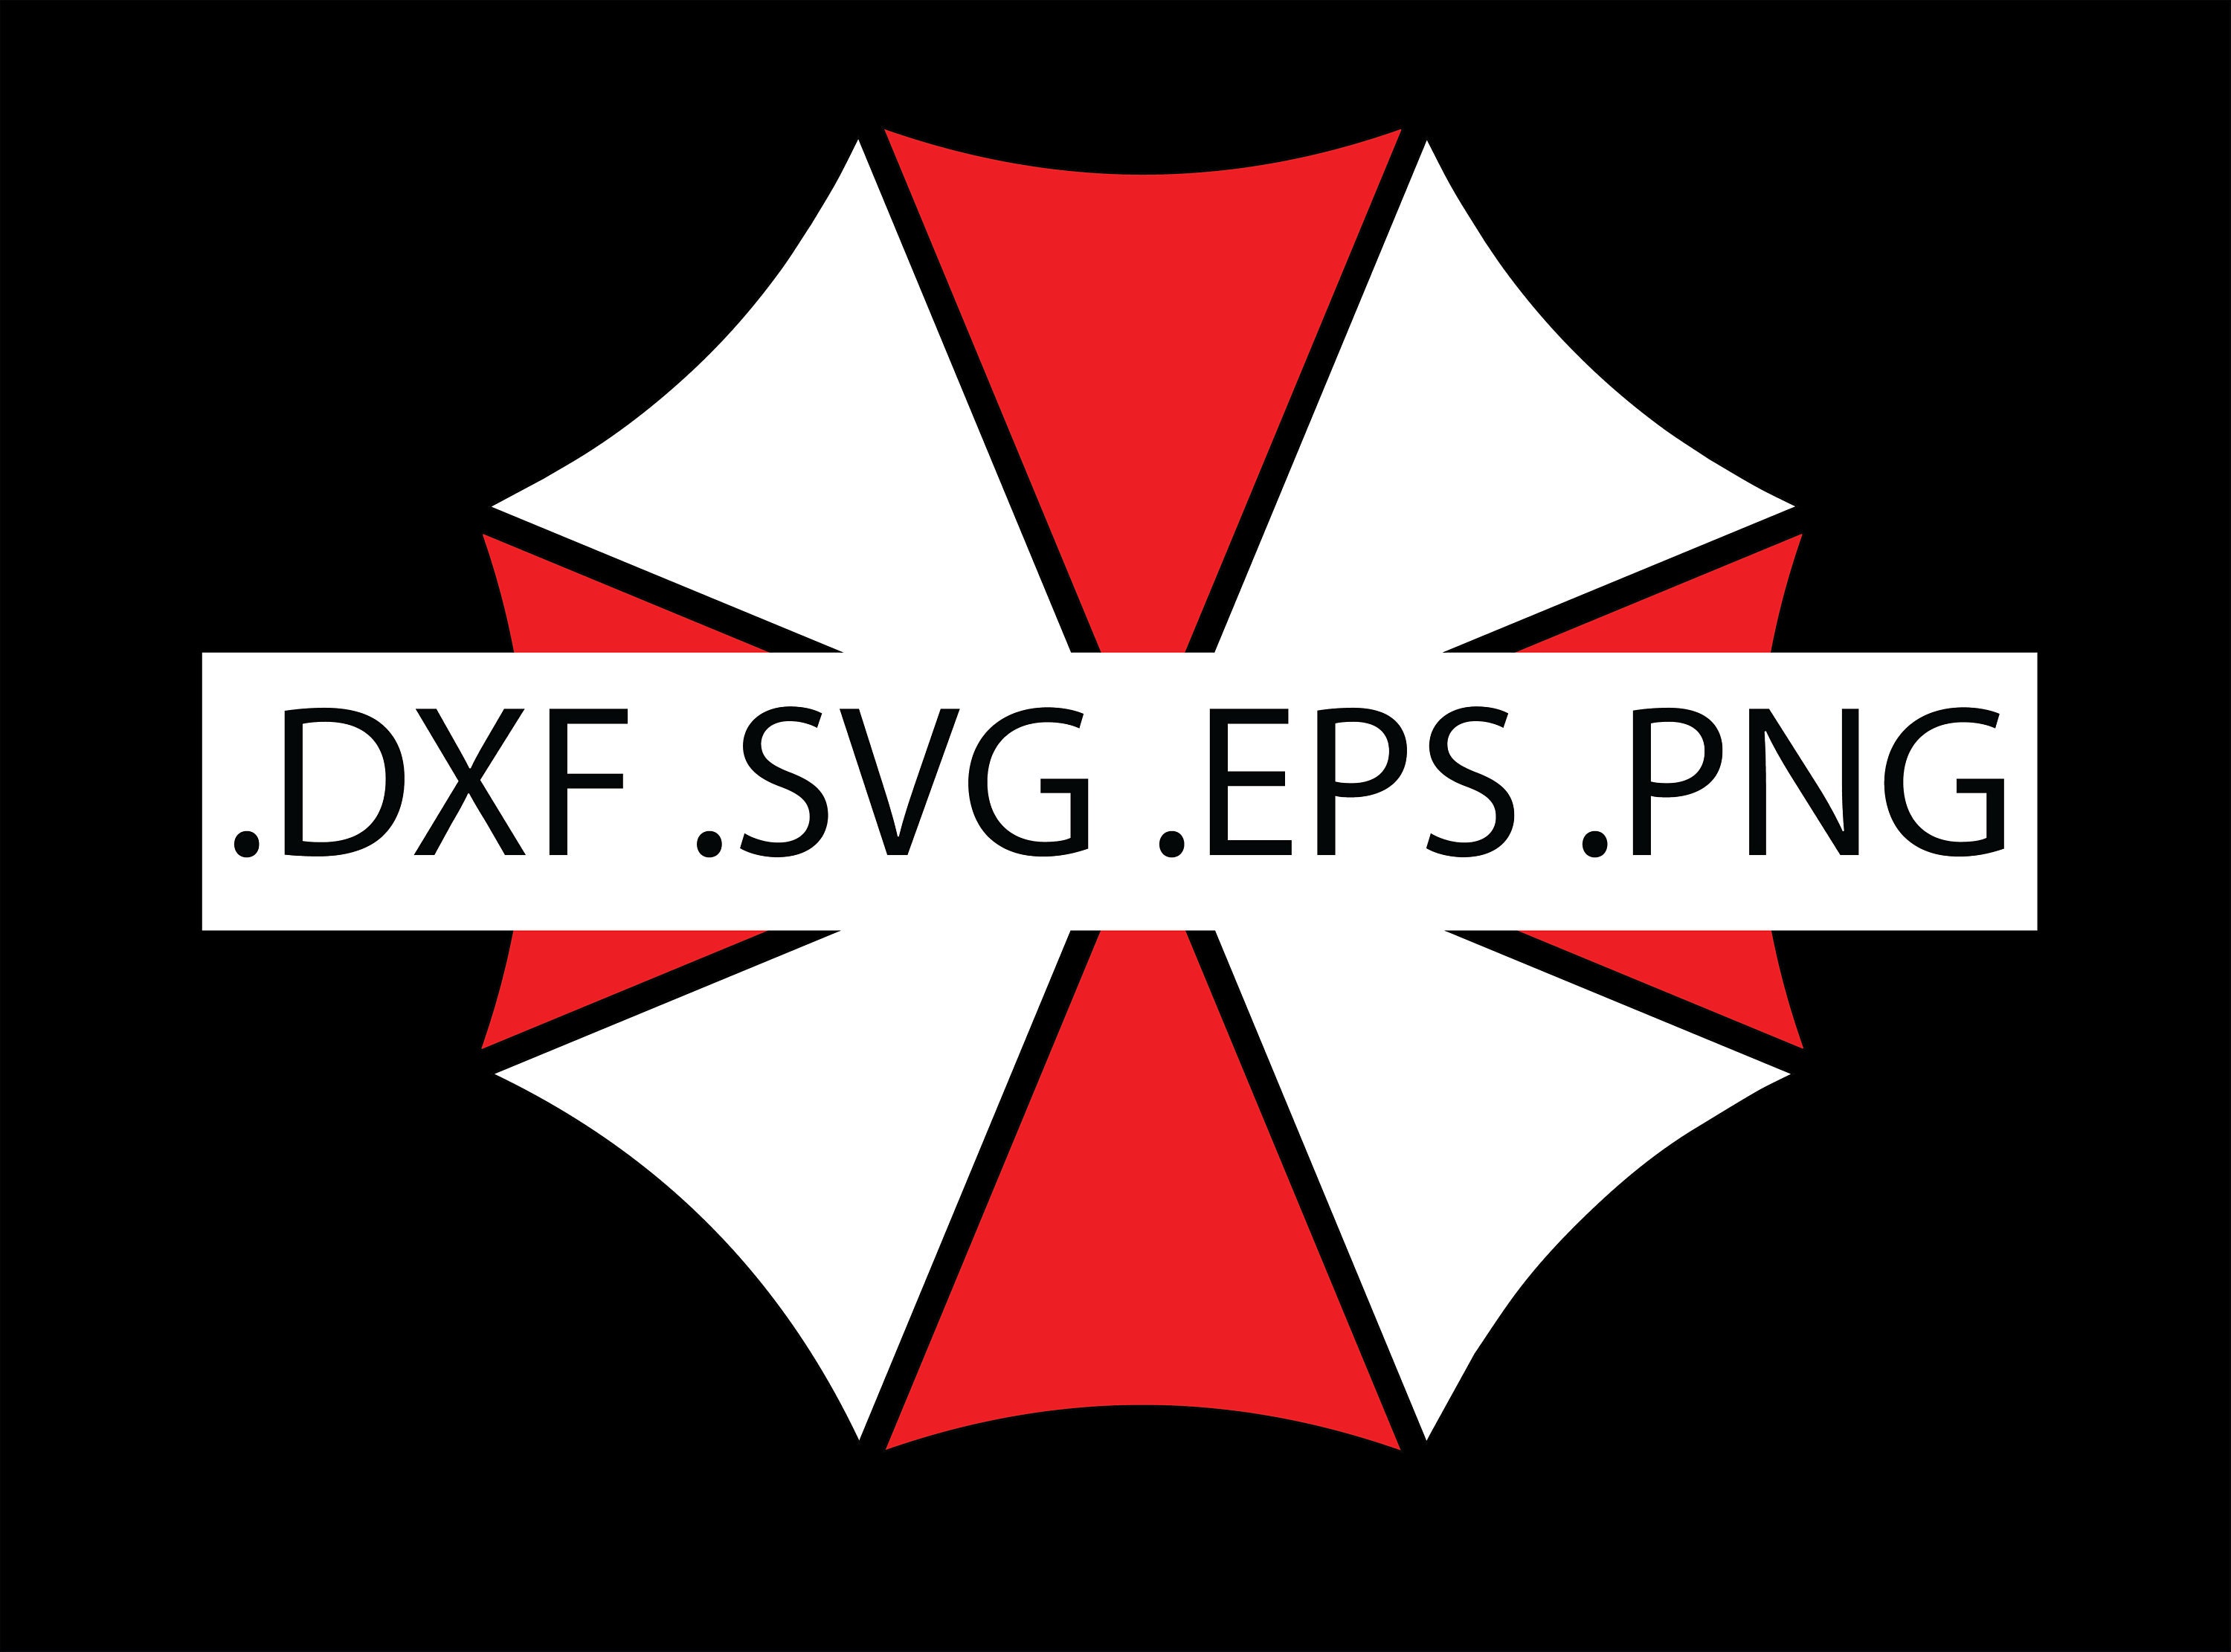 Umbrella Corporation Resident Evil Black Logo Sticker – Popahead